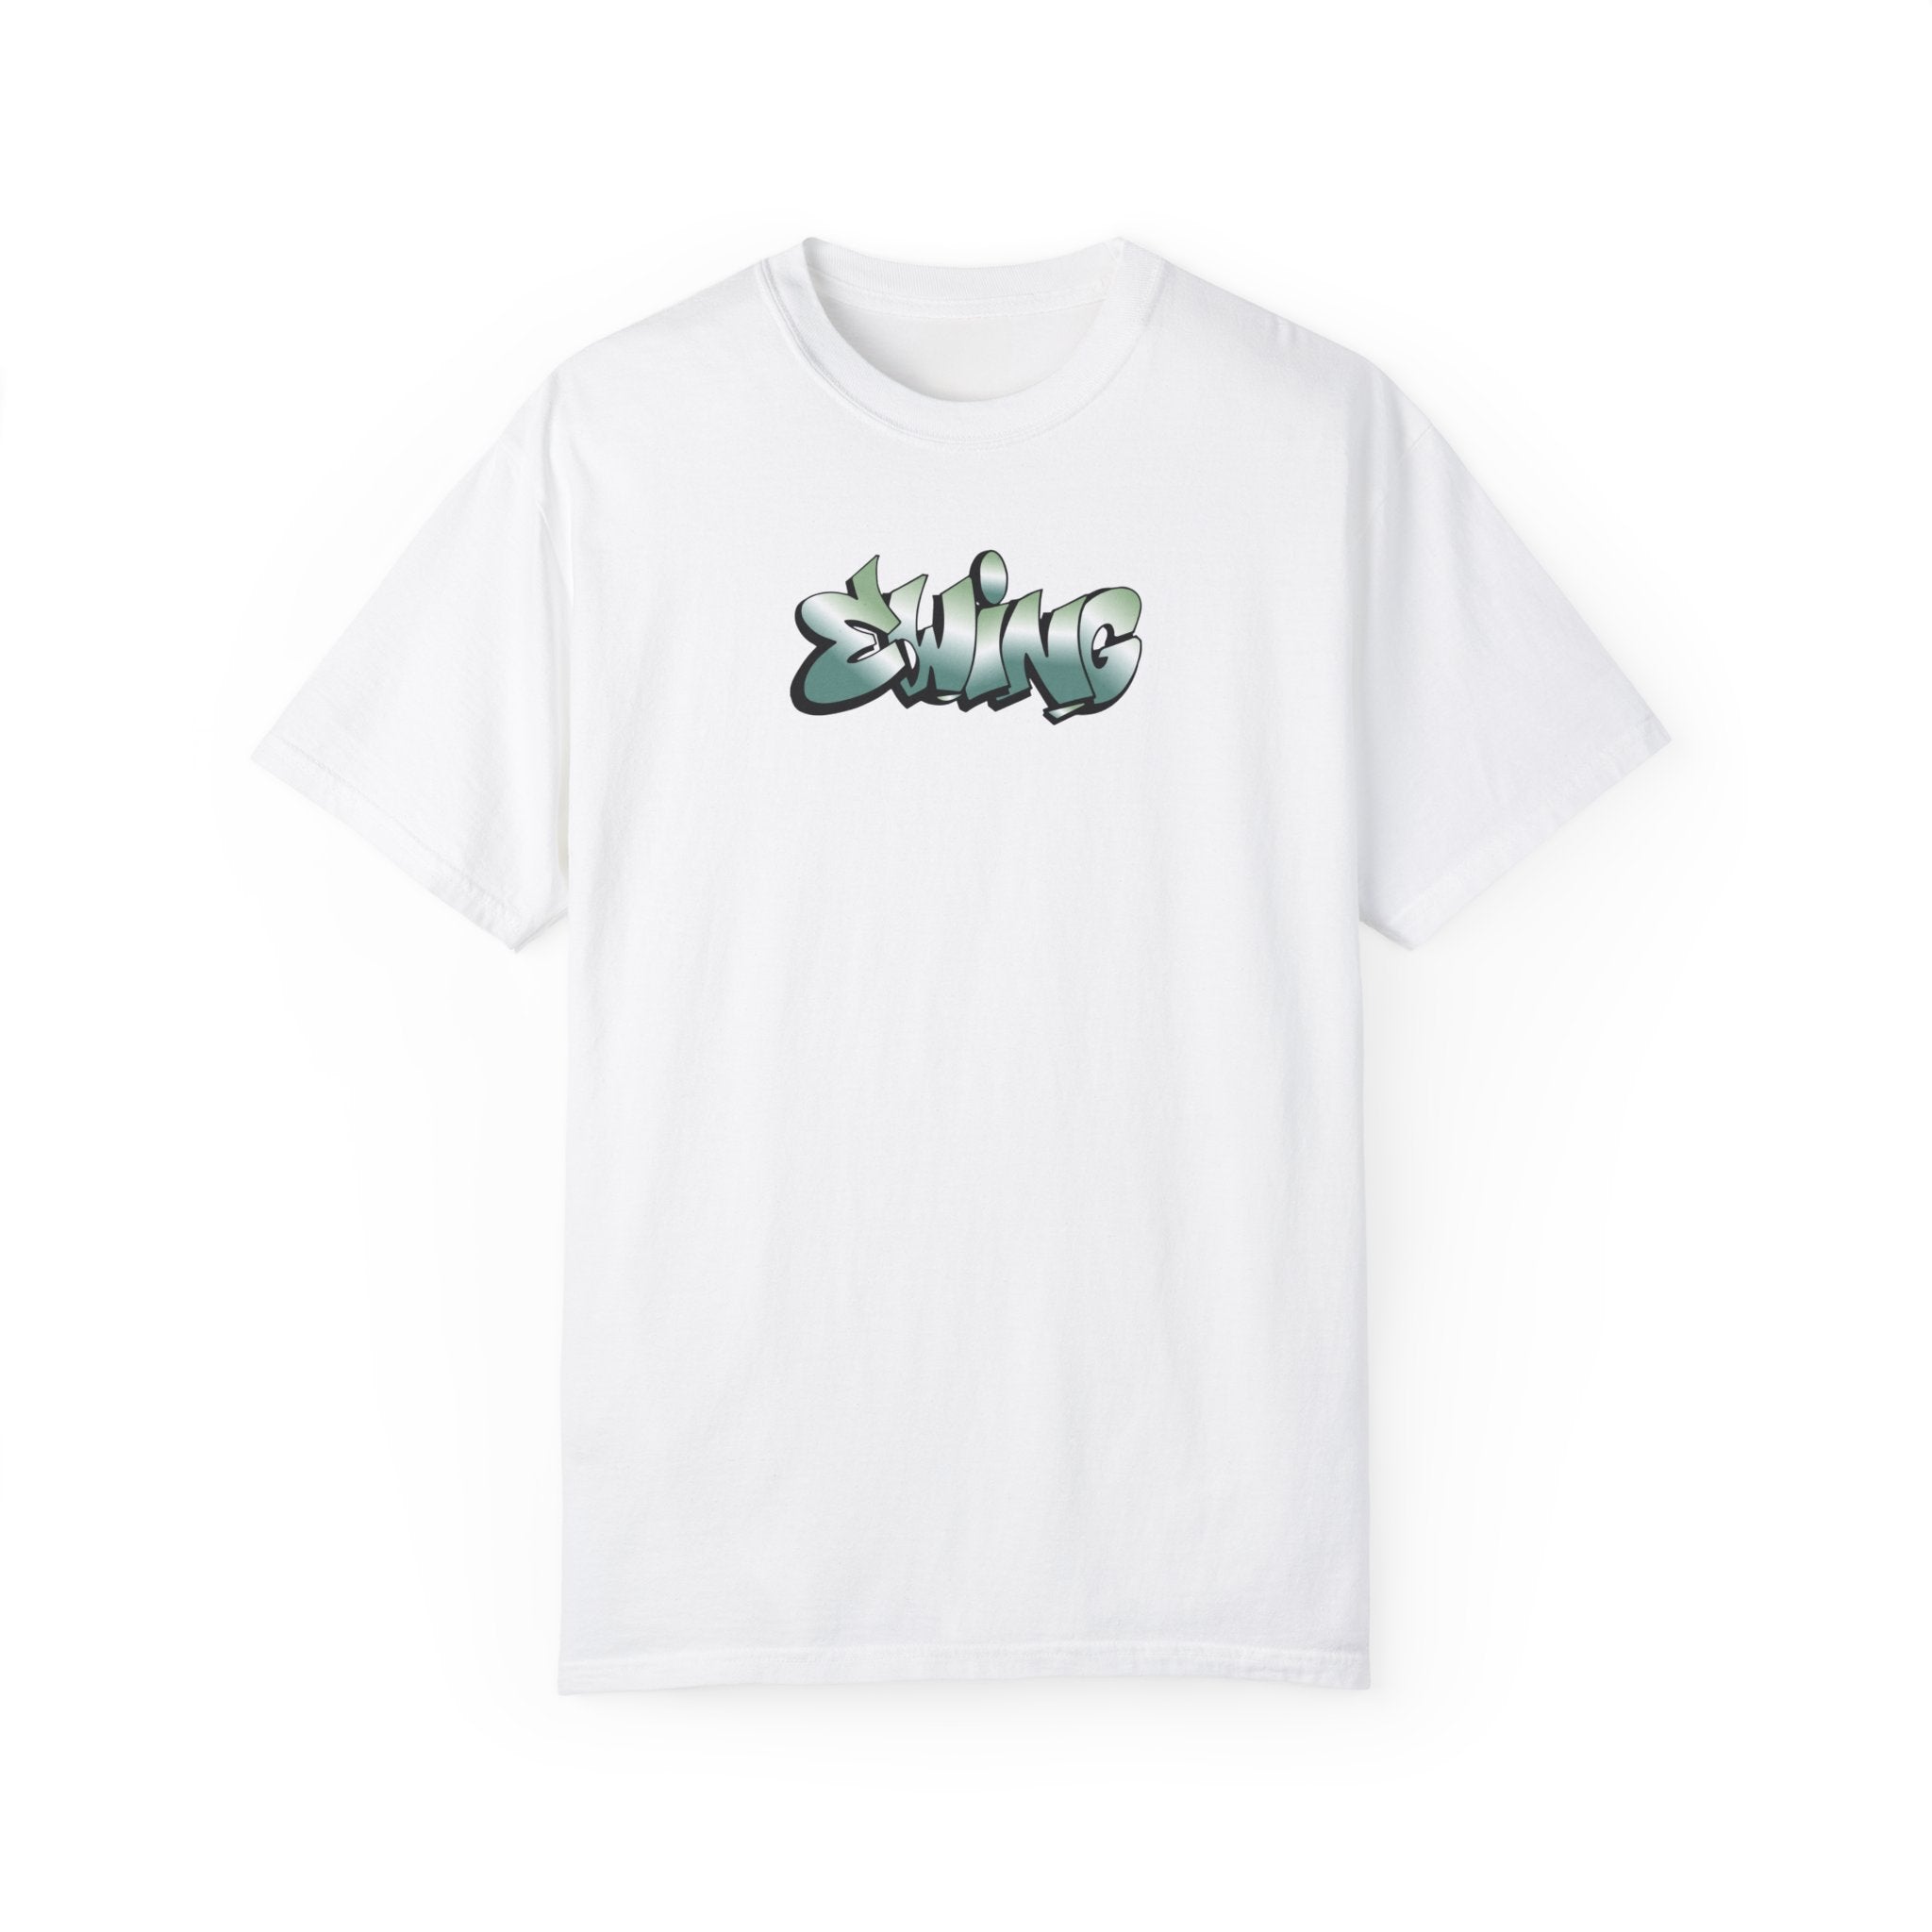 Ewing x Cope T-Shirt